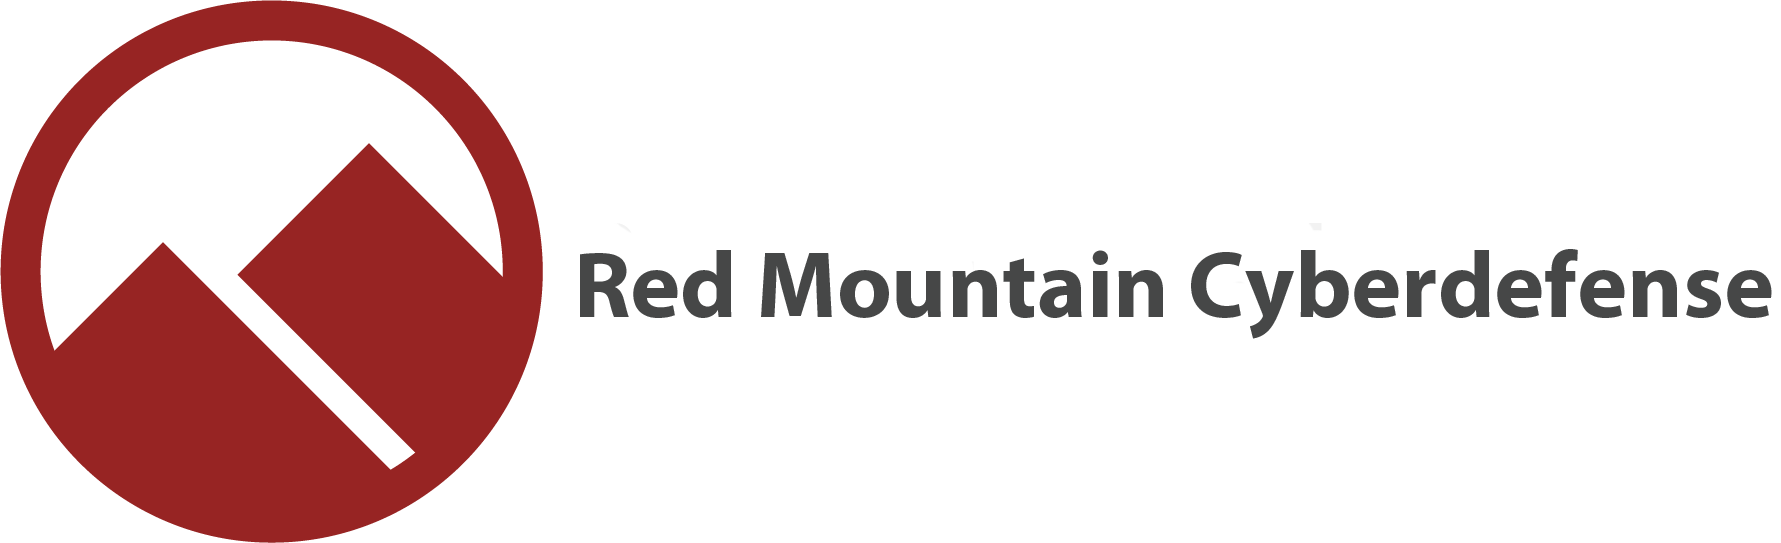 Red Mountain Logo - mobile security Mountain Cyberdefense